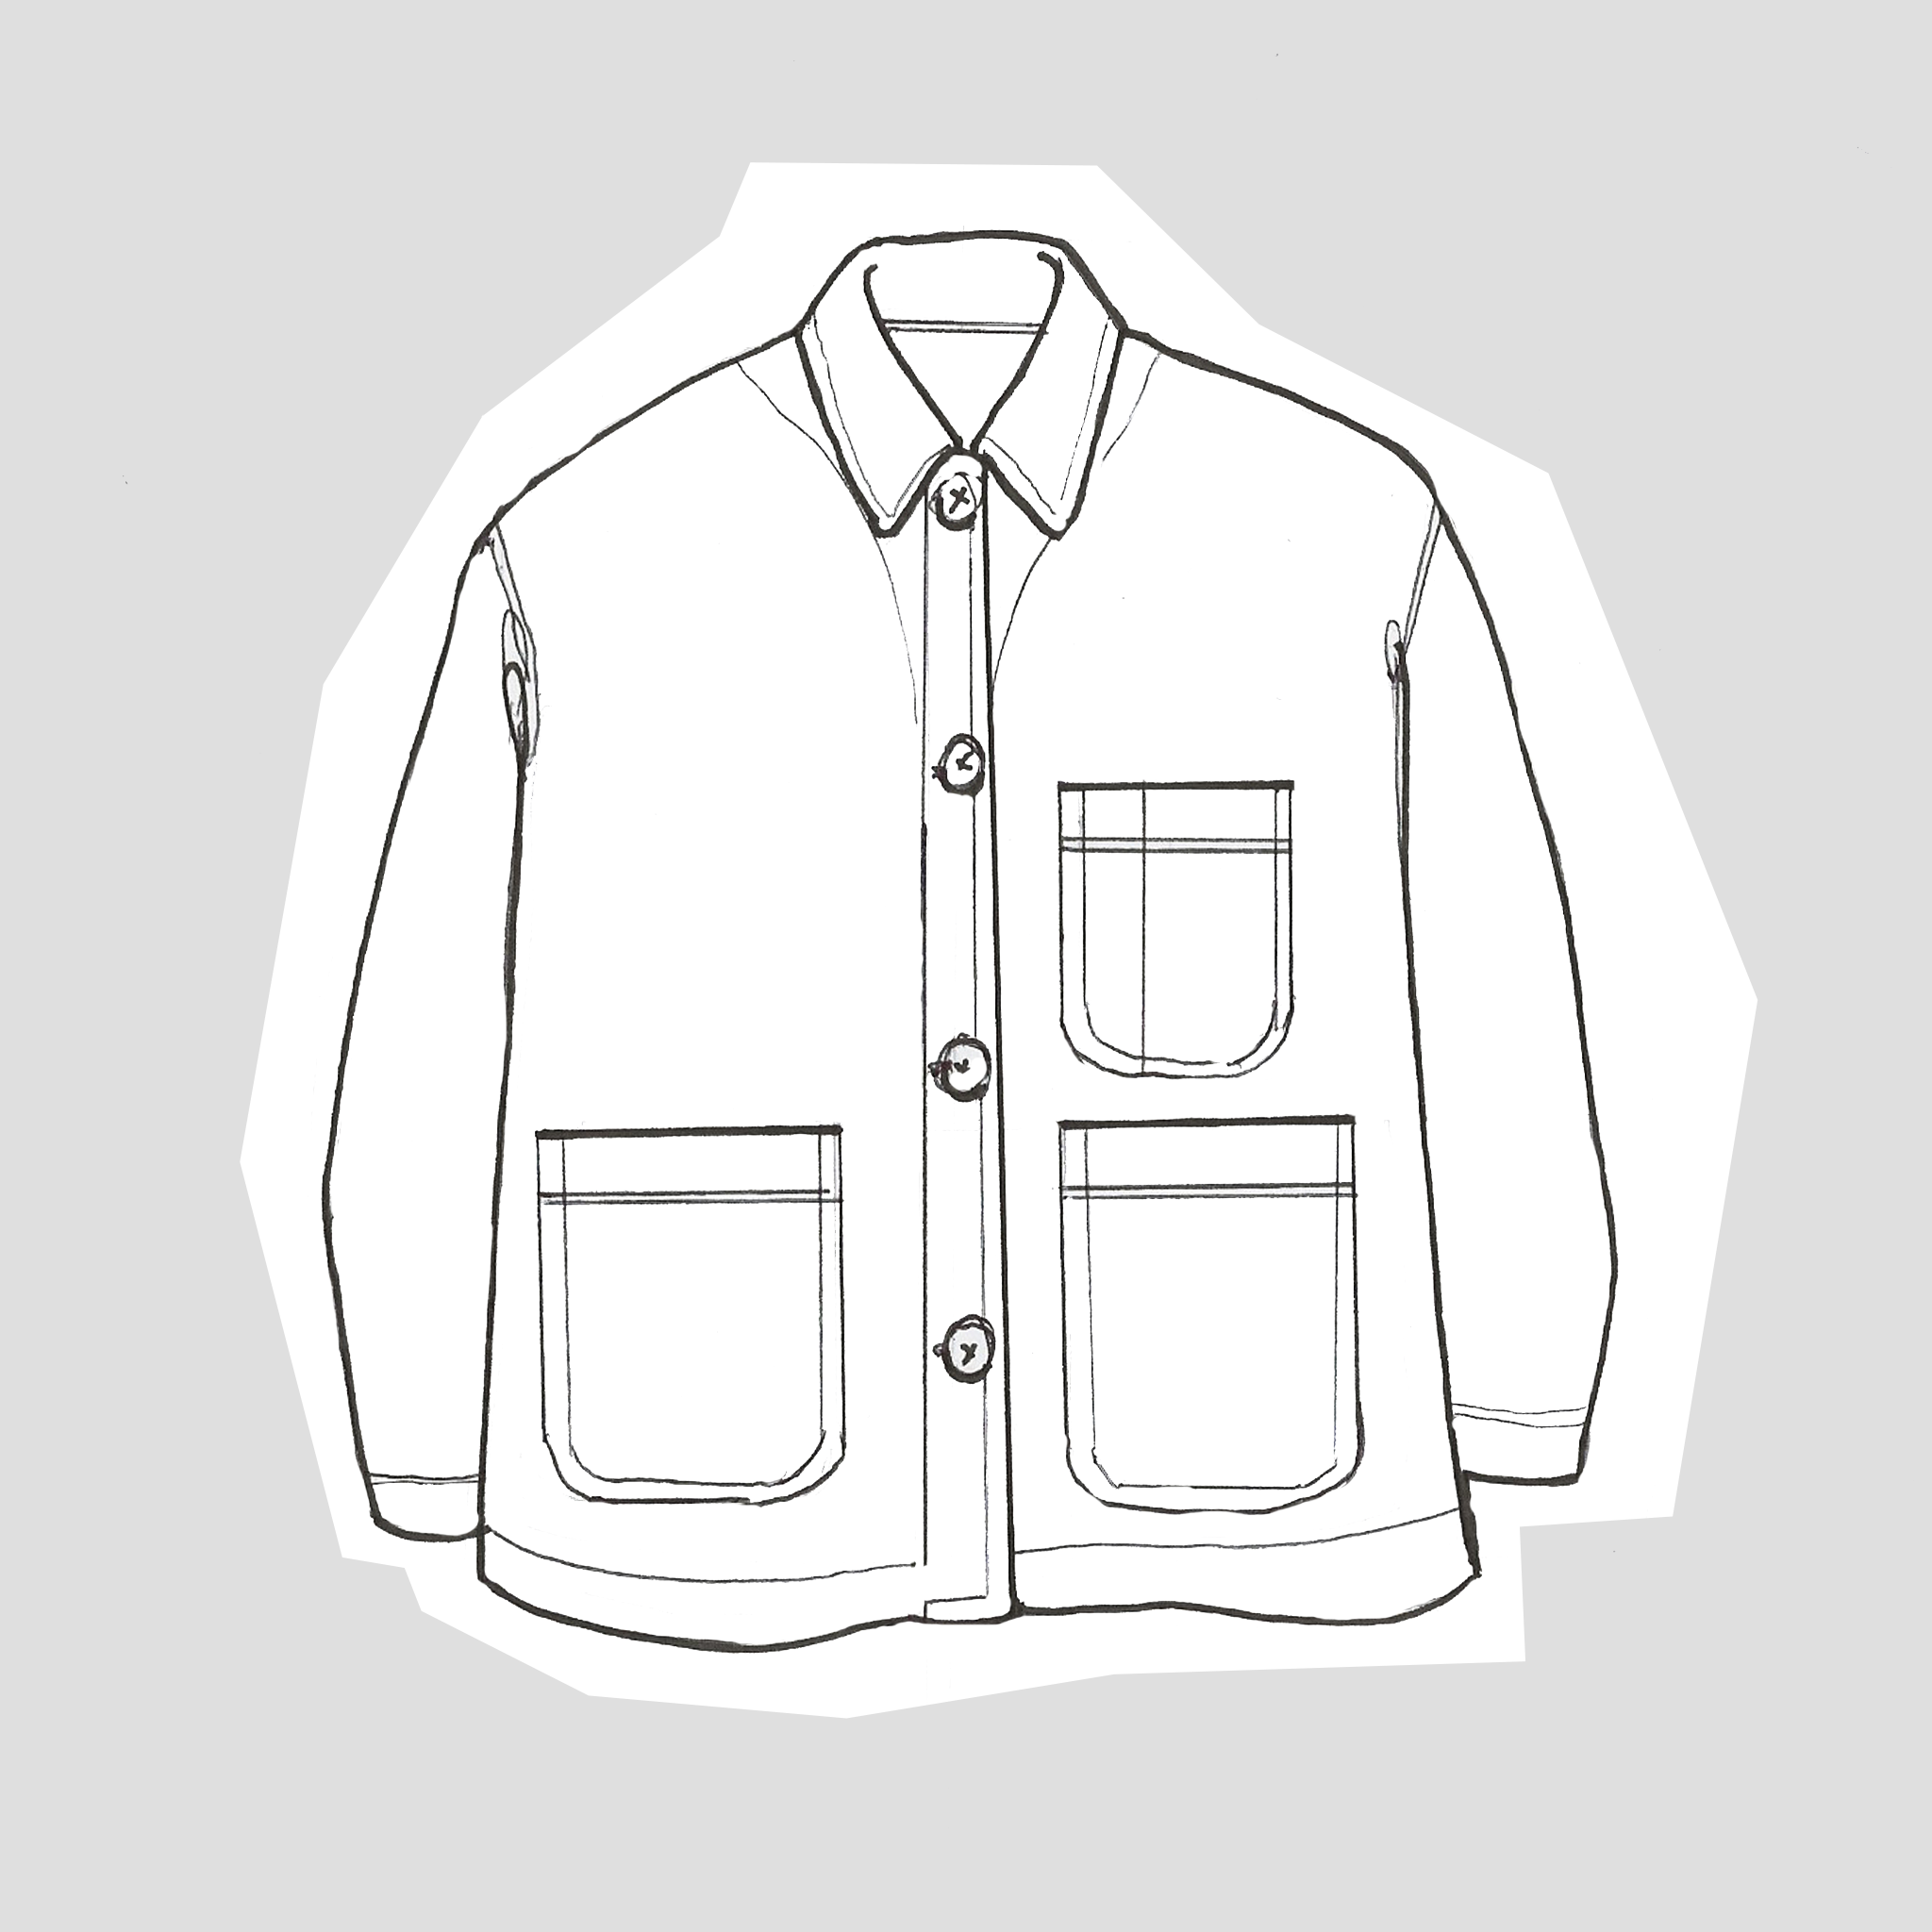 Simple chore jacket soft navy twill